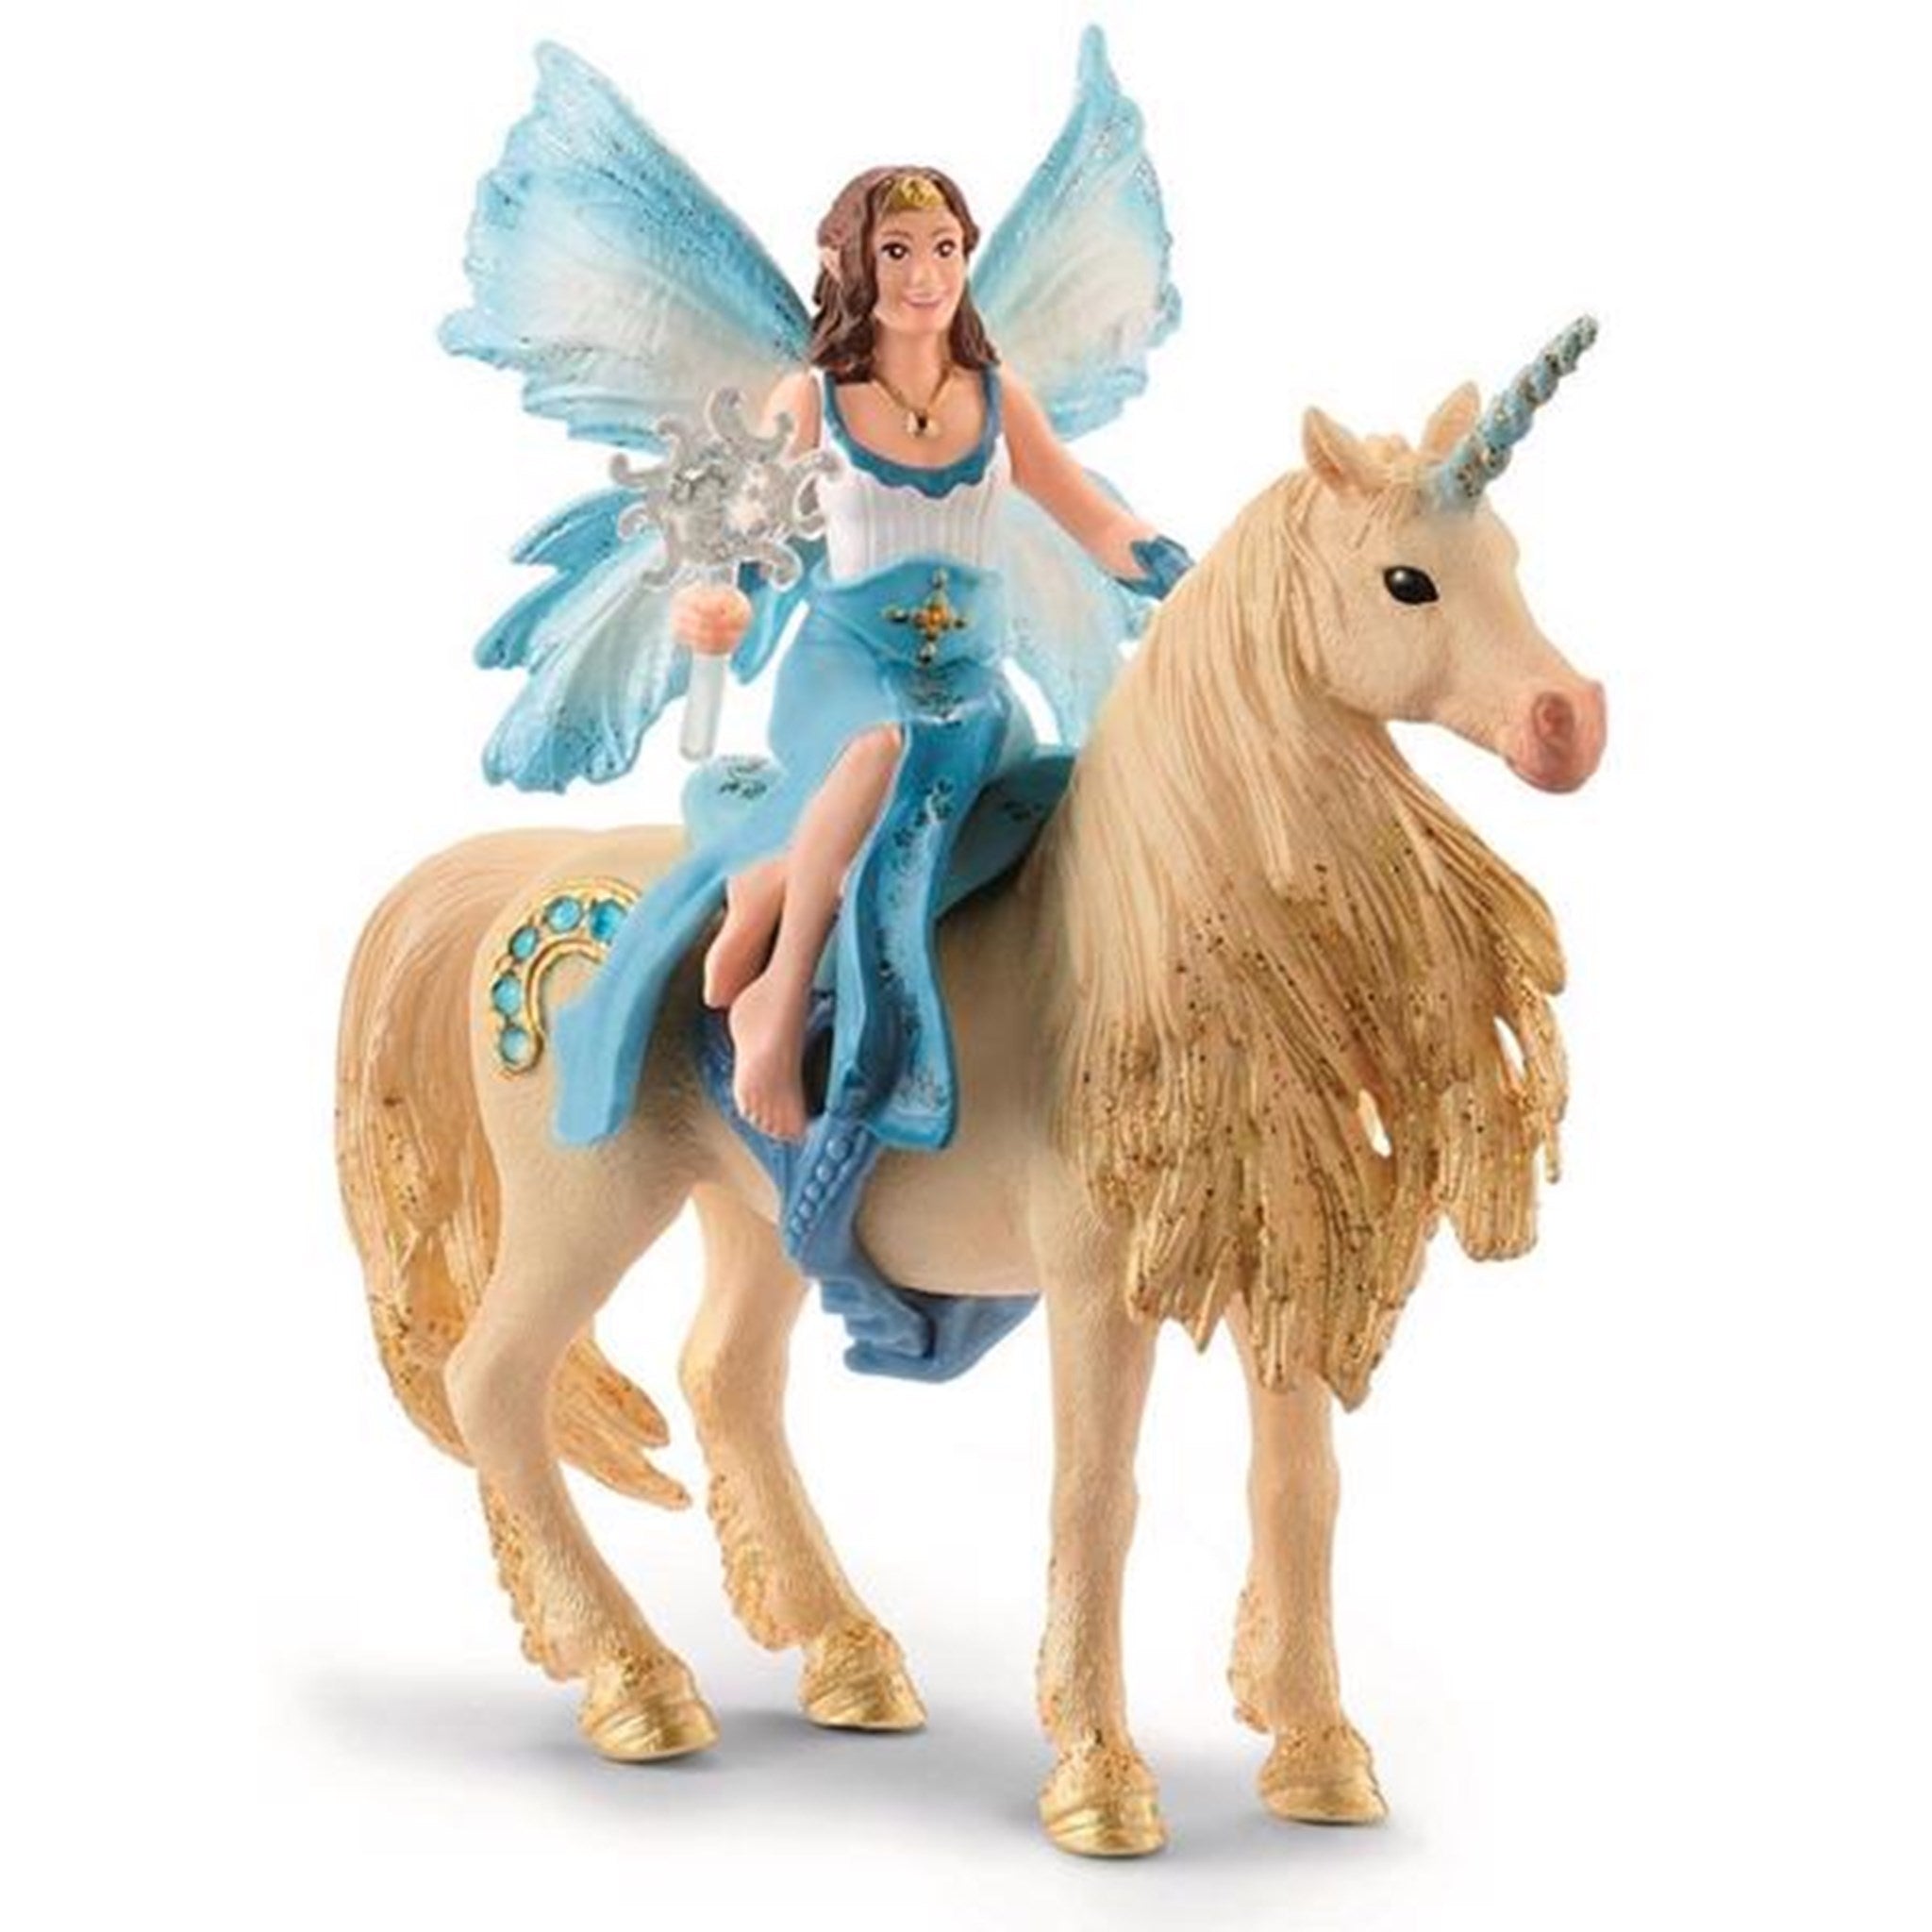 Schleich Bayala Eyela Riding on Sea Unicorn